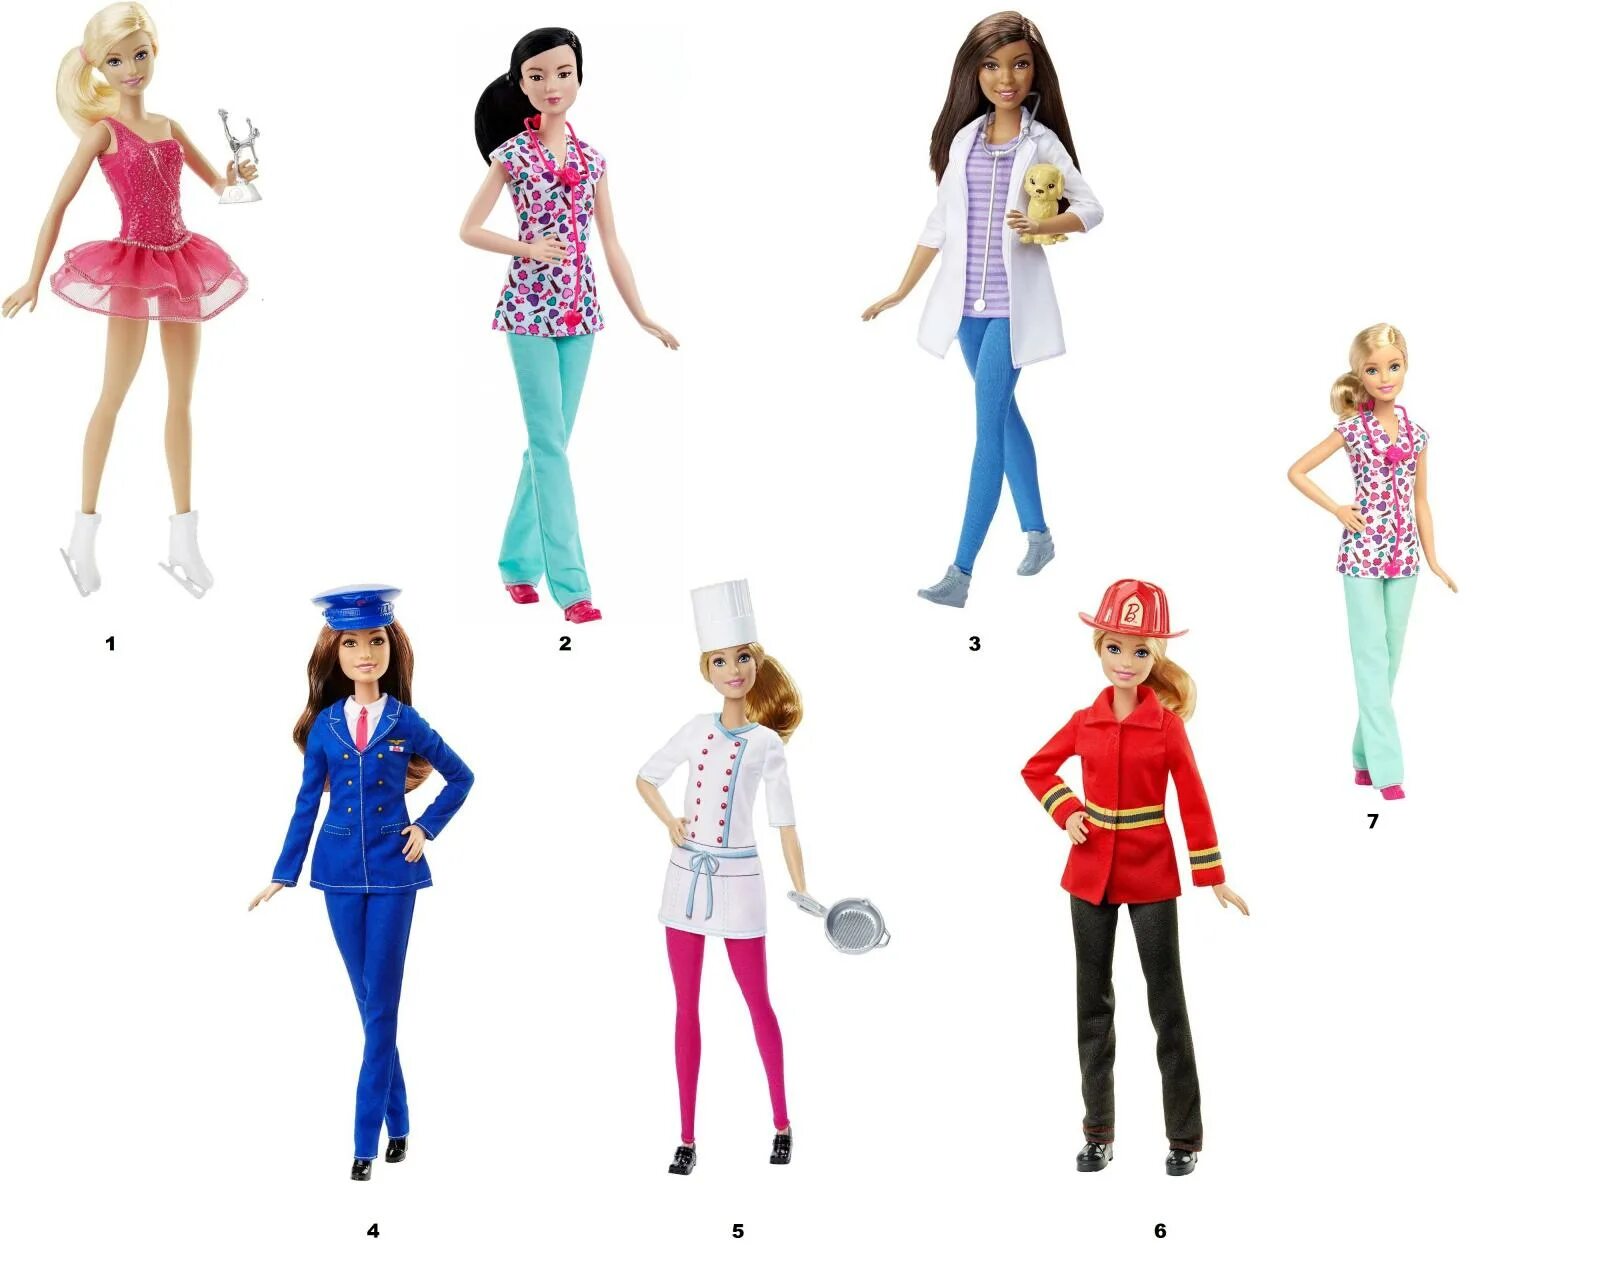 Валберис кукла Барби. Кукла Барби профессии. Одежда для кукол Барби профессии. Барби разные профессии.